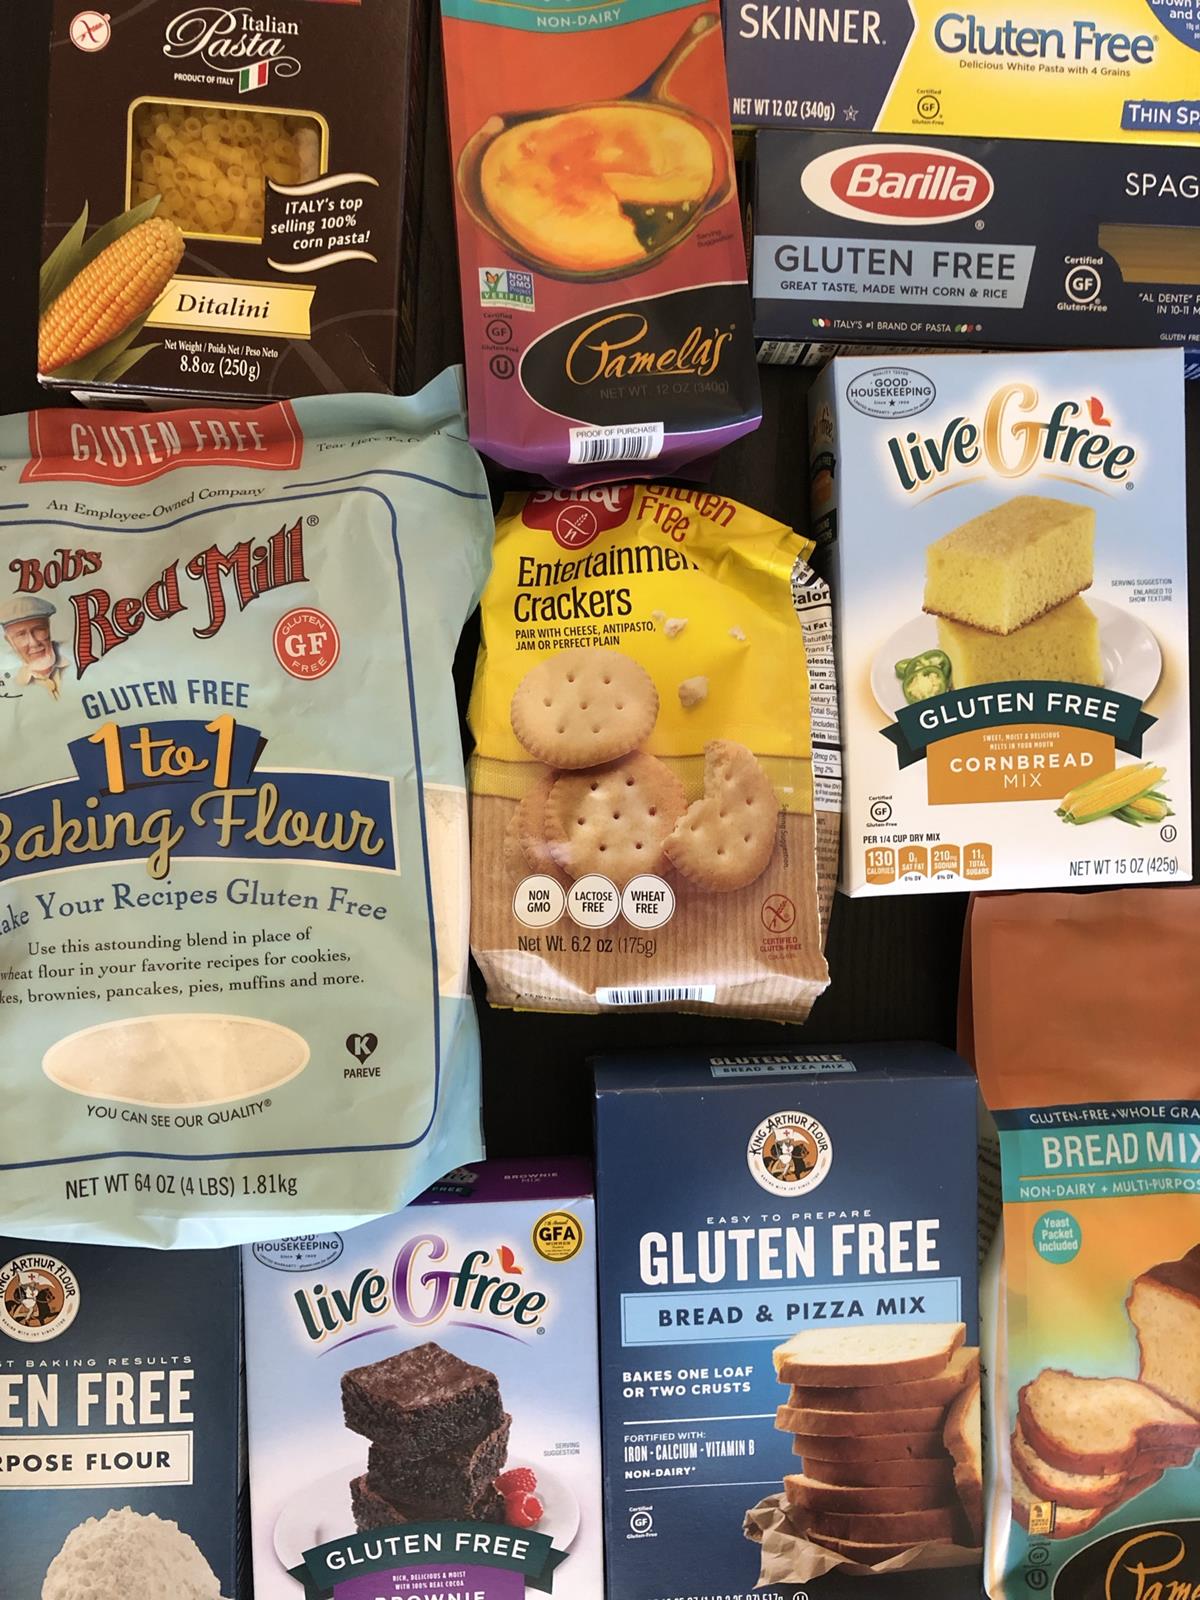 Discount gluten-free items